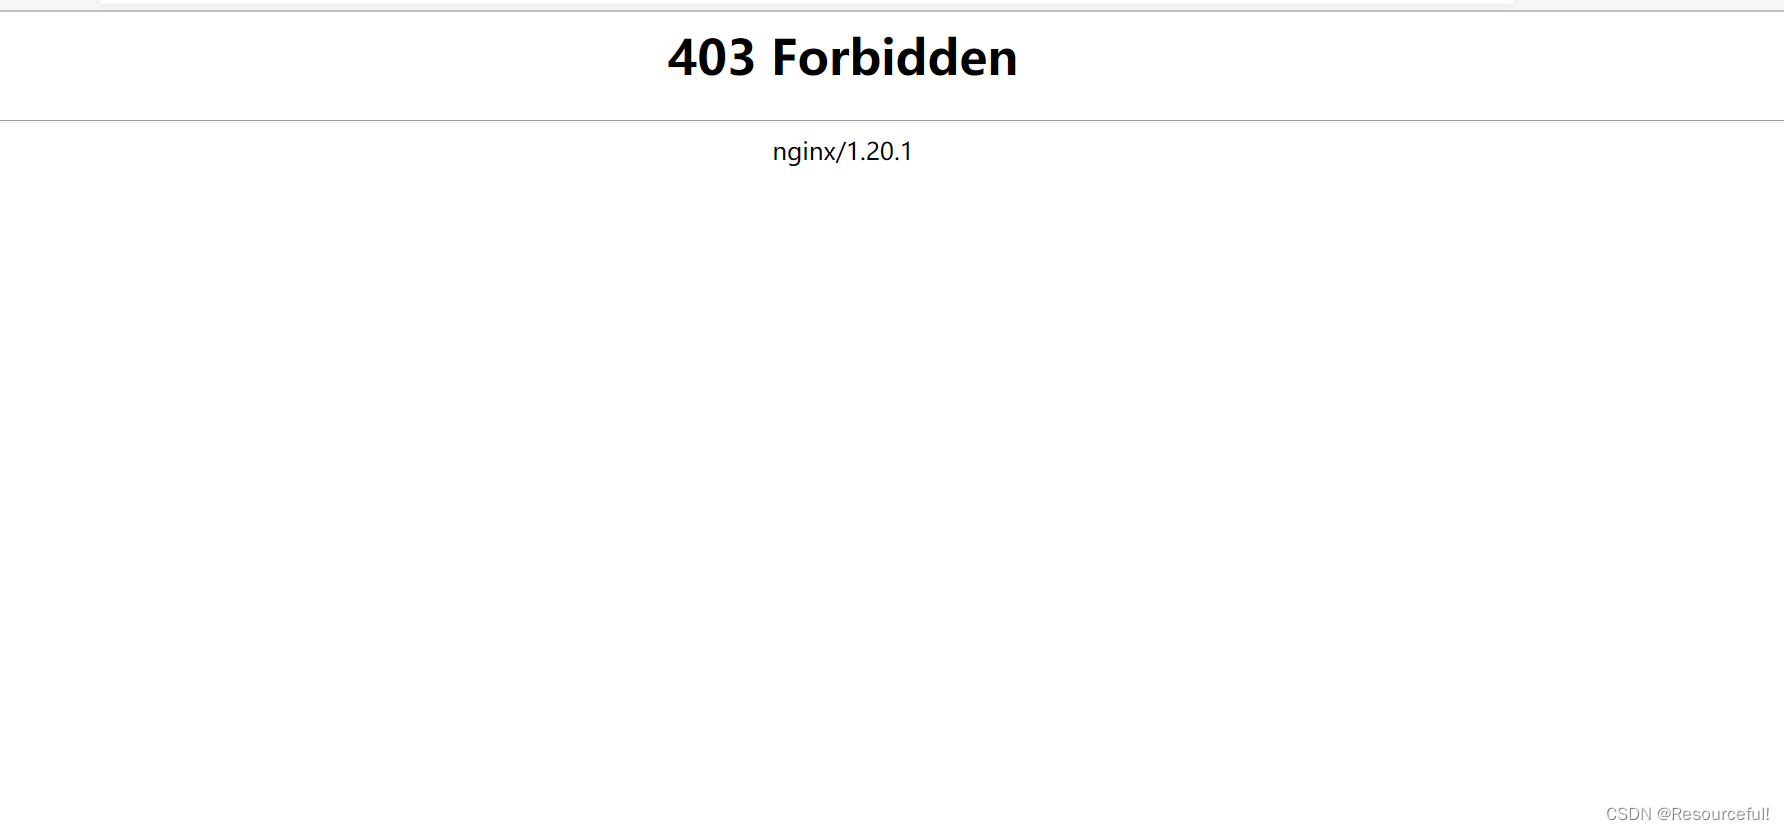 403 Forbidden nginx/1.20.1_linux